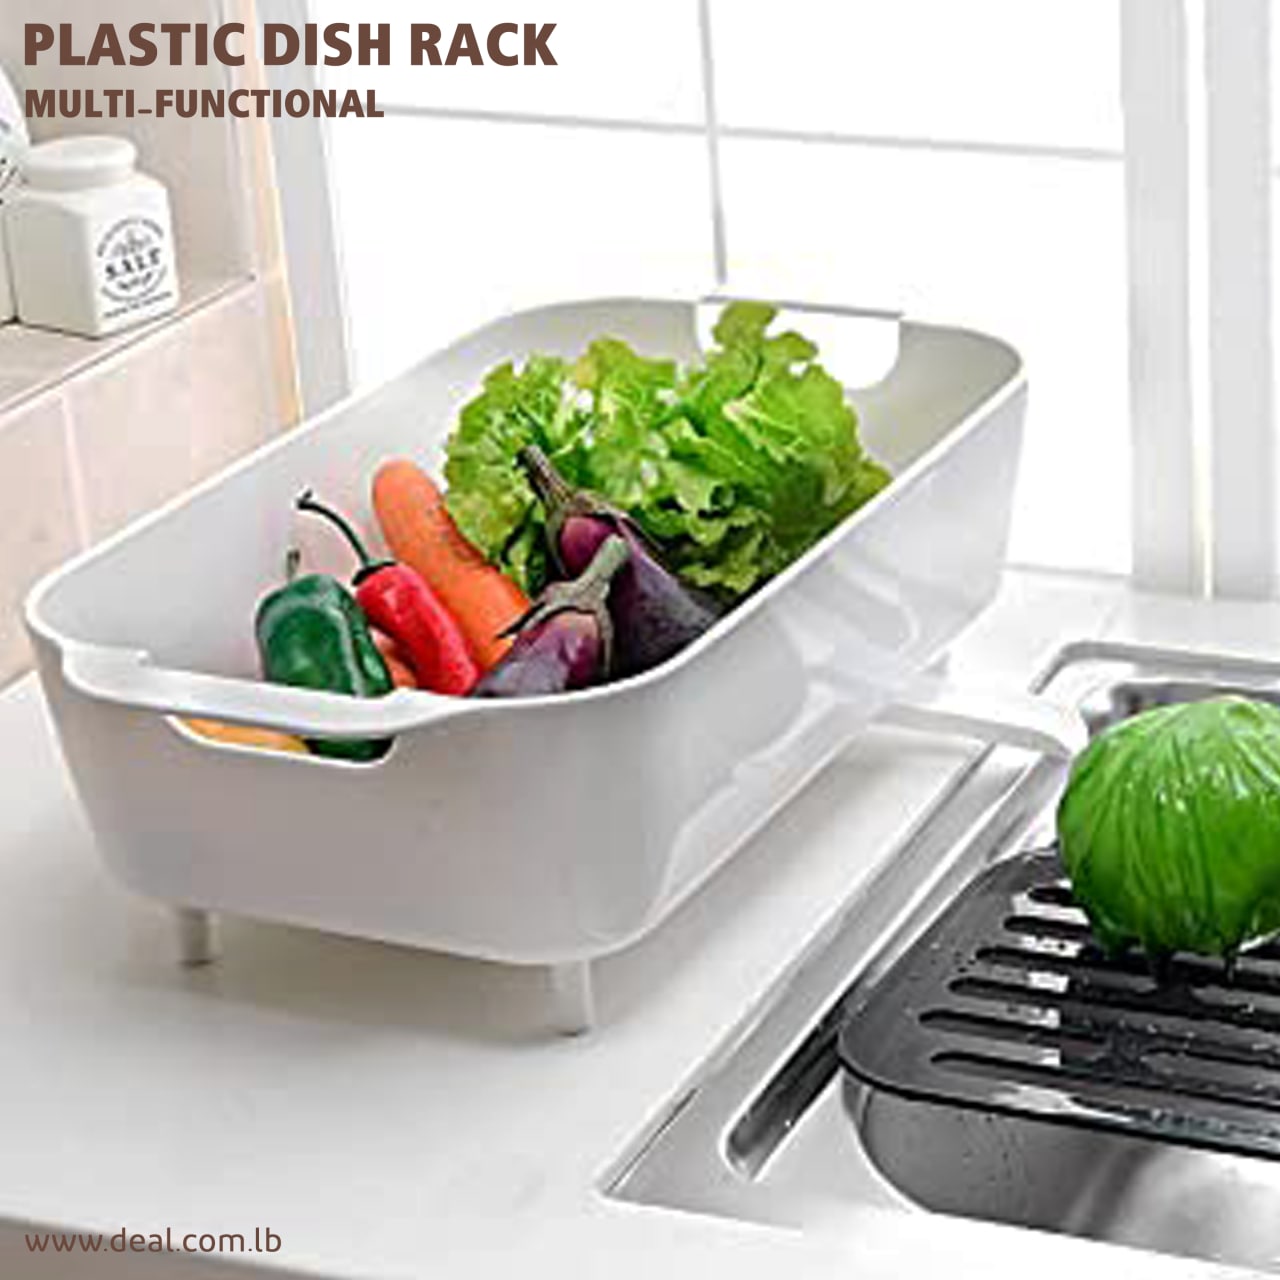 Multi-Functional+Plastic+Dish+Rack+%7C+Thoughtful+Arc+Guide+Design+%2C+Avoid+To+Splashing